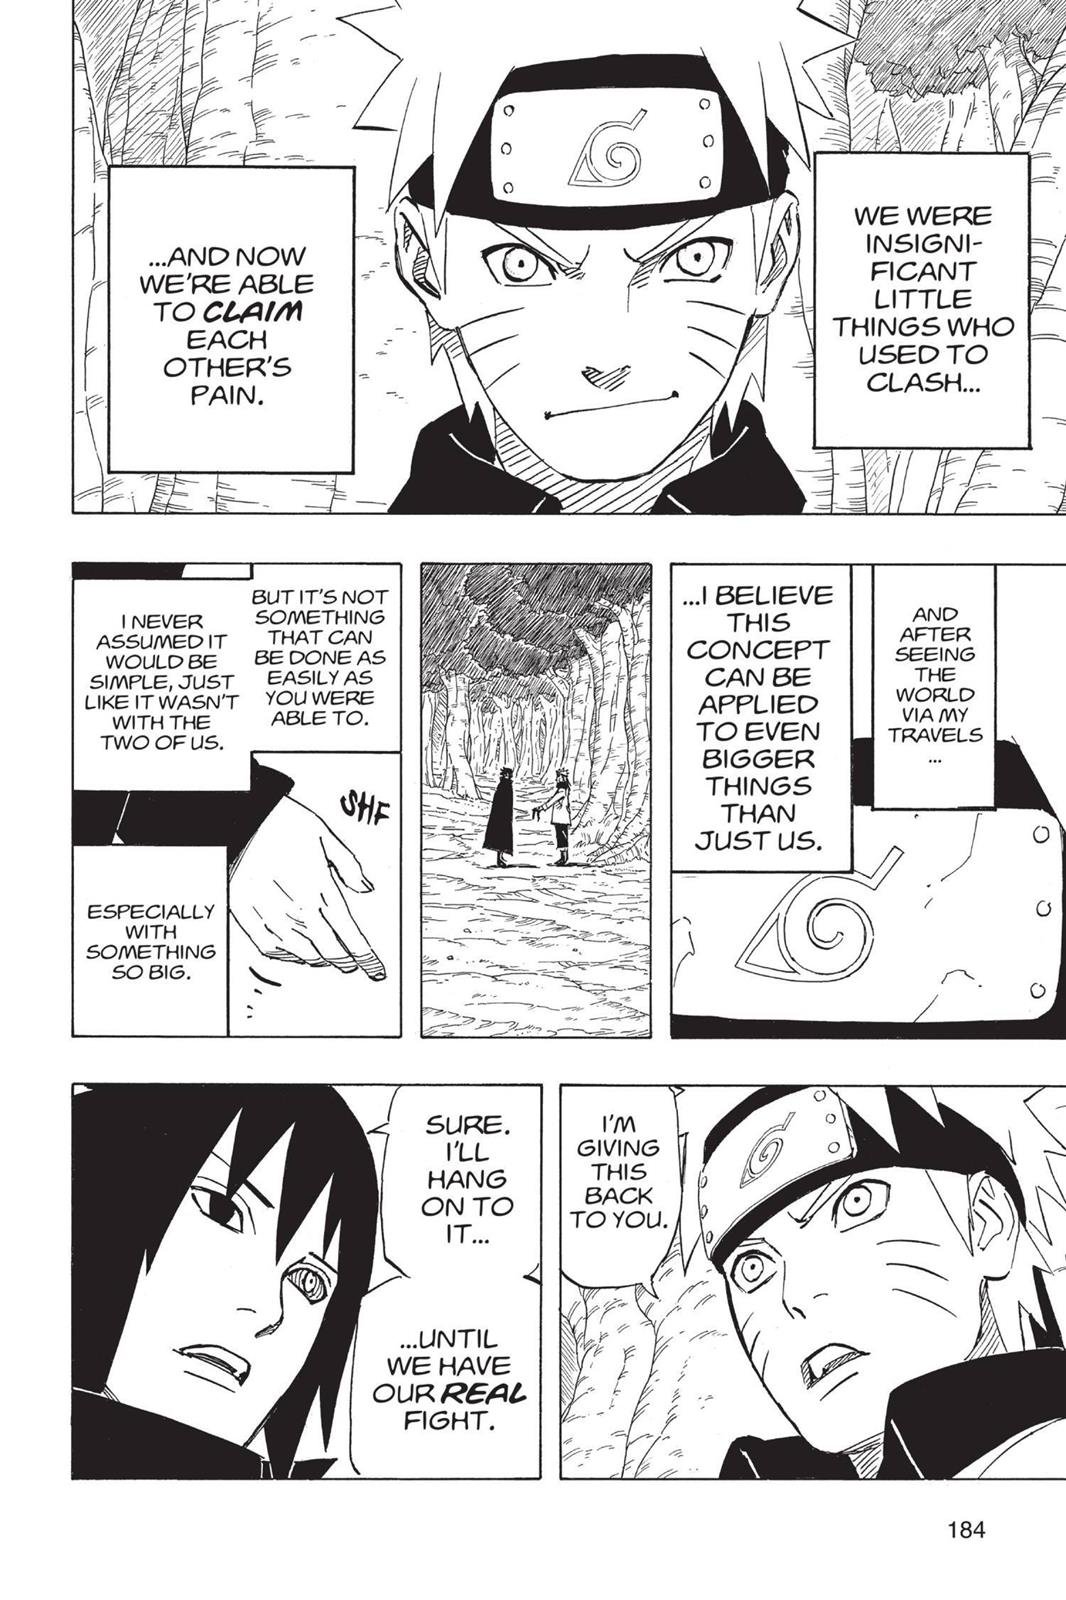 VIZ on X: Naruto's gotten stronger Sasuke. BELIEVE IT!